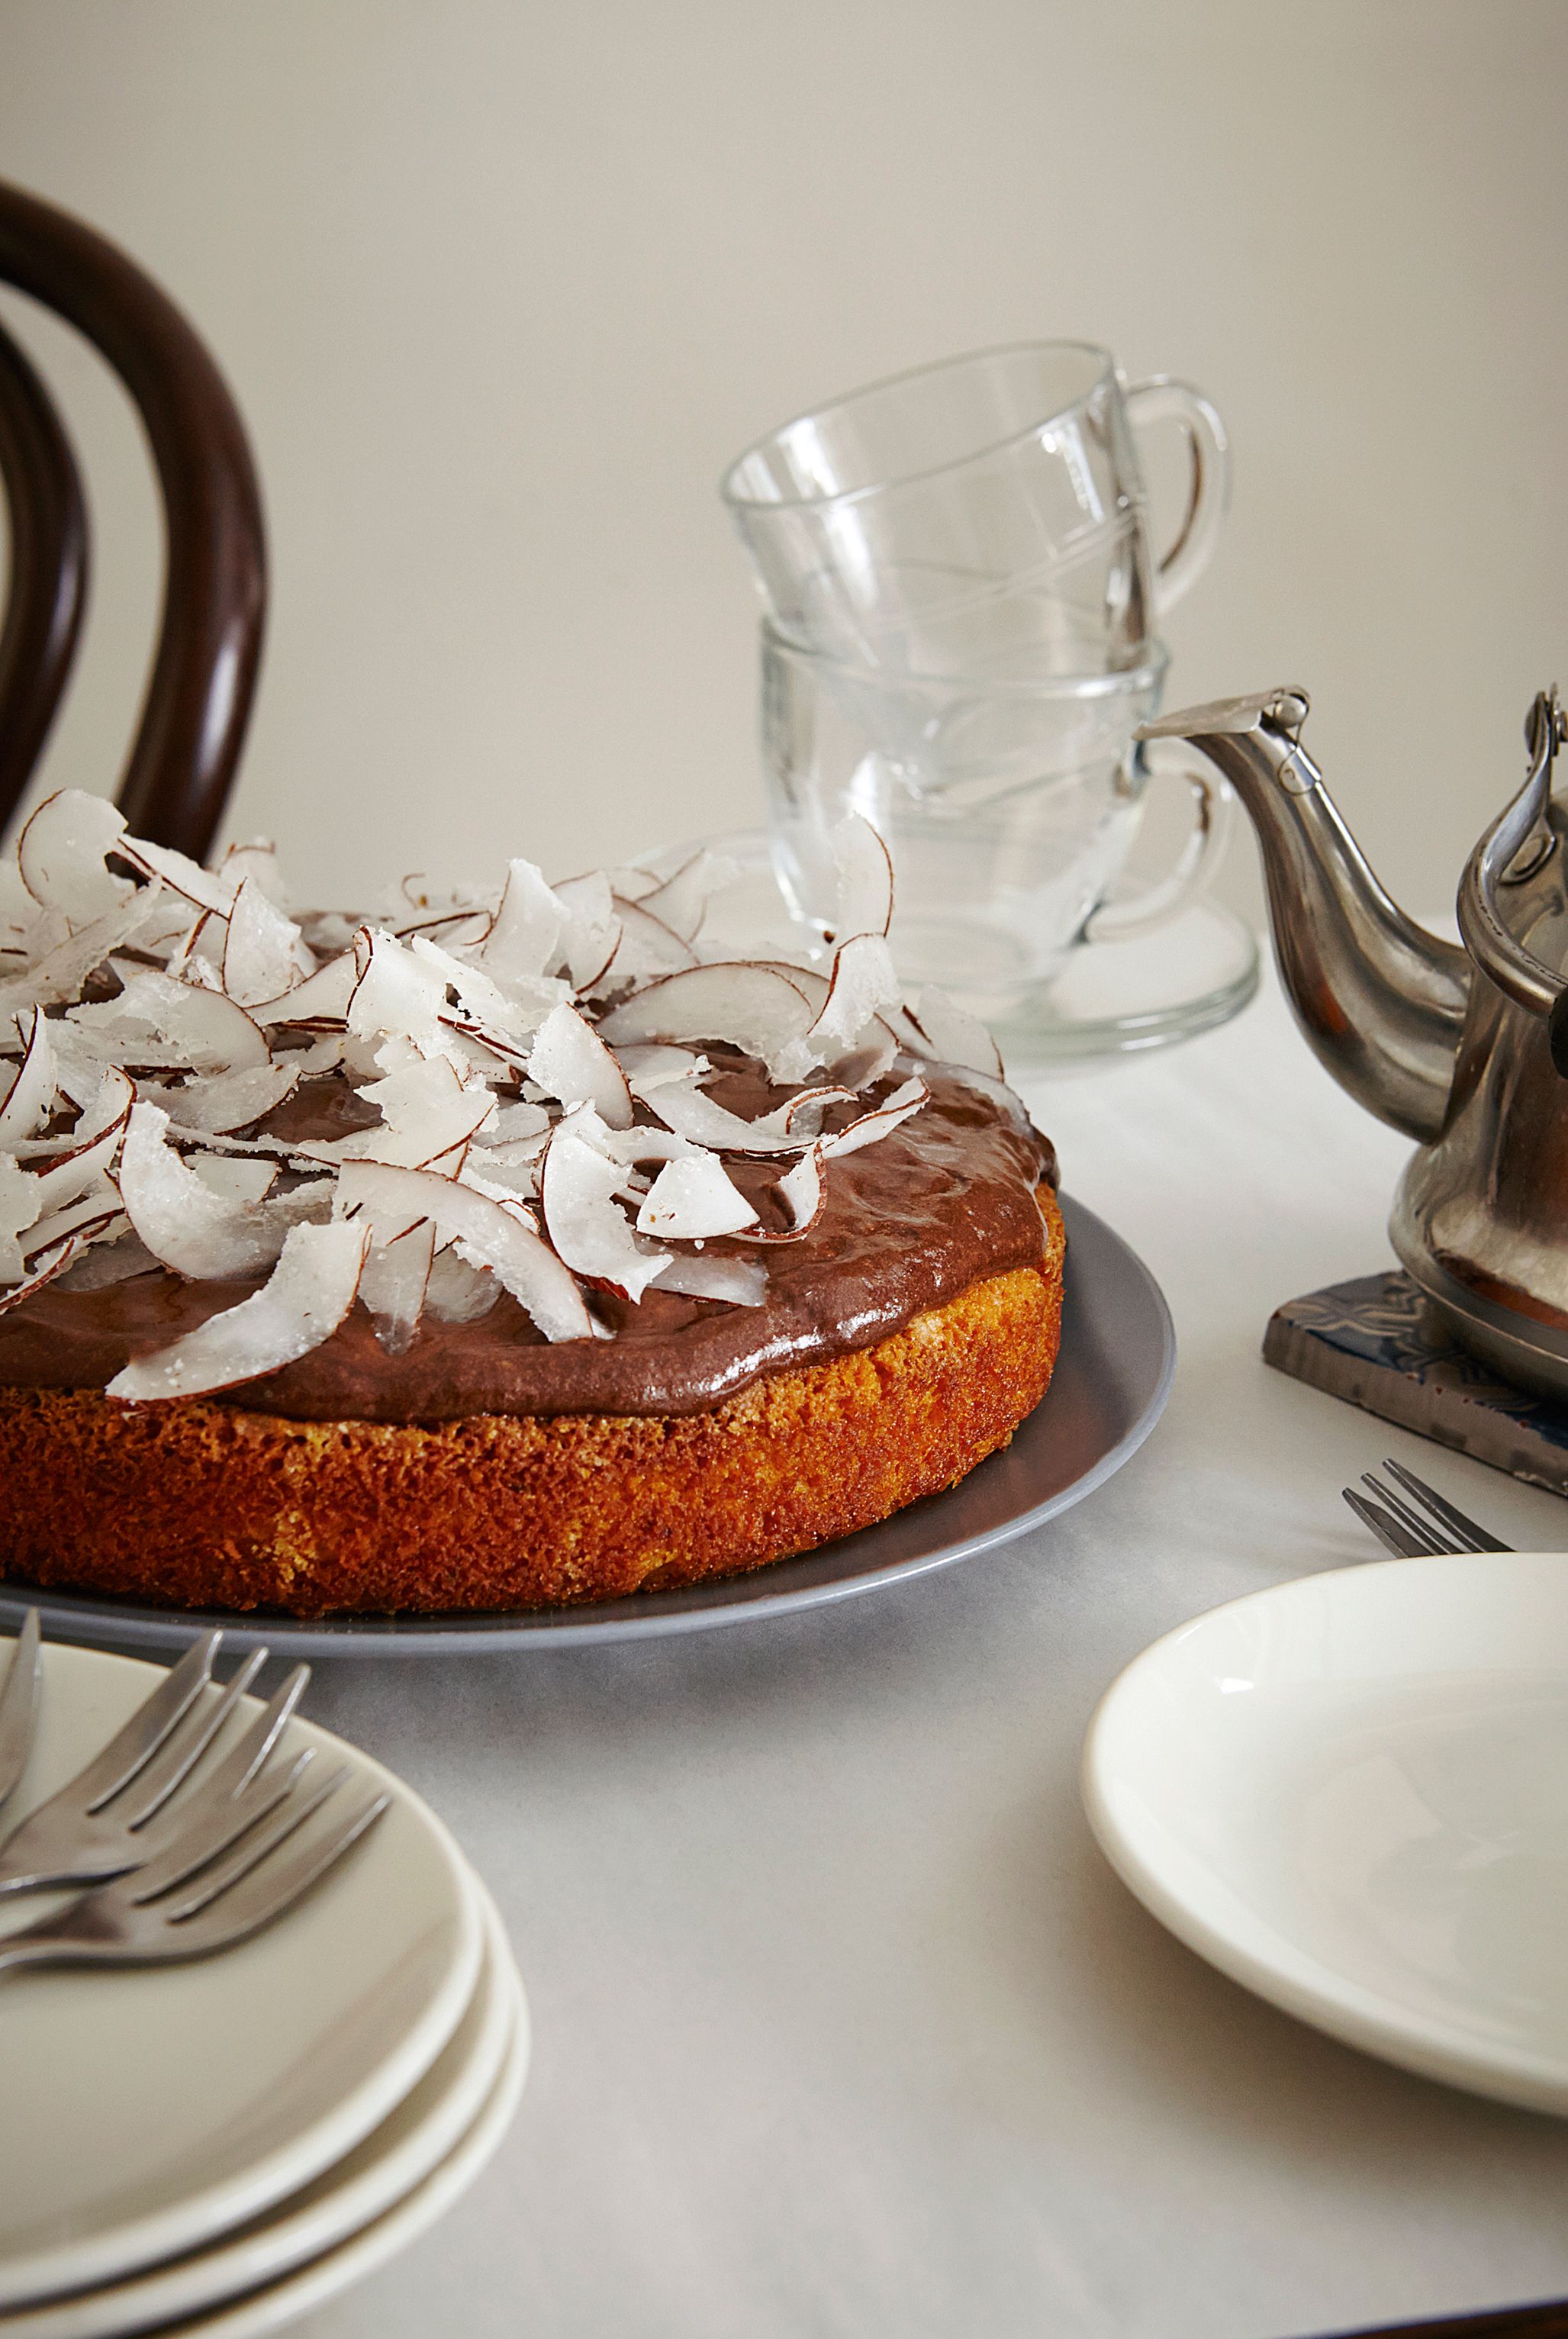 10 Best Crock Pot Chocolate Desserts Recipes | Yummly